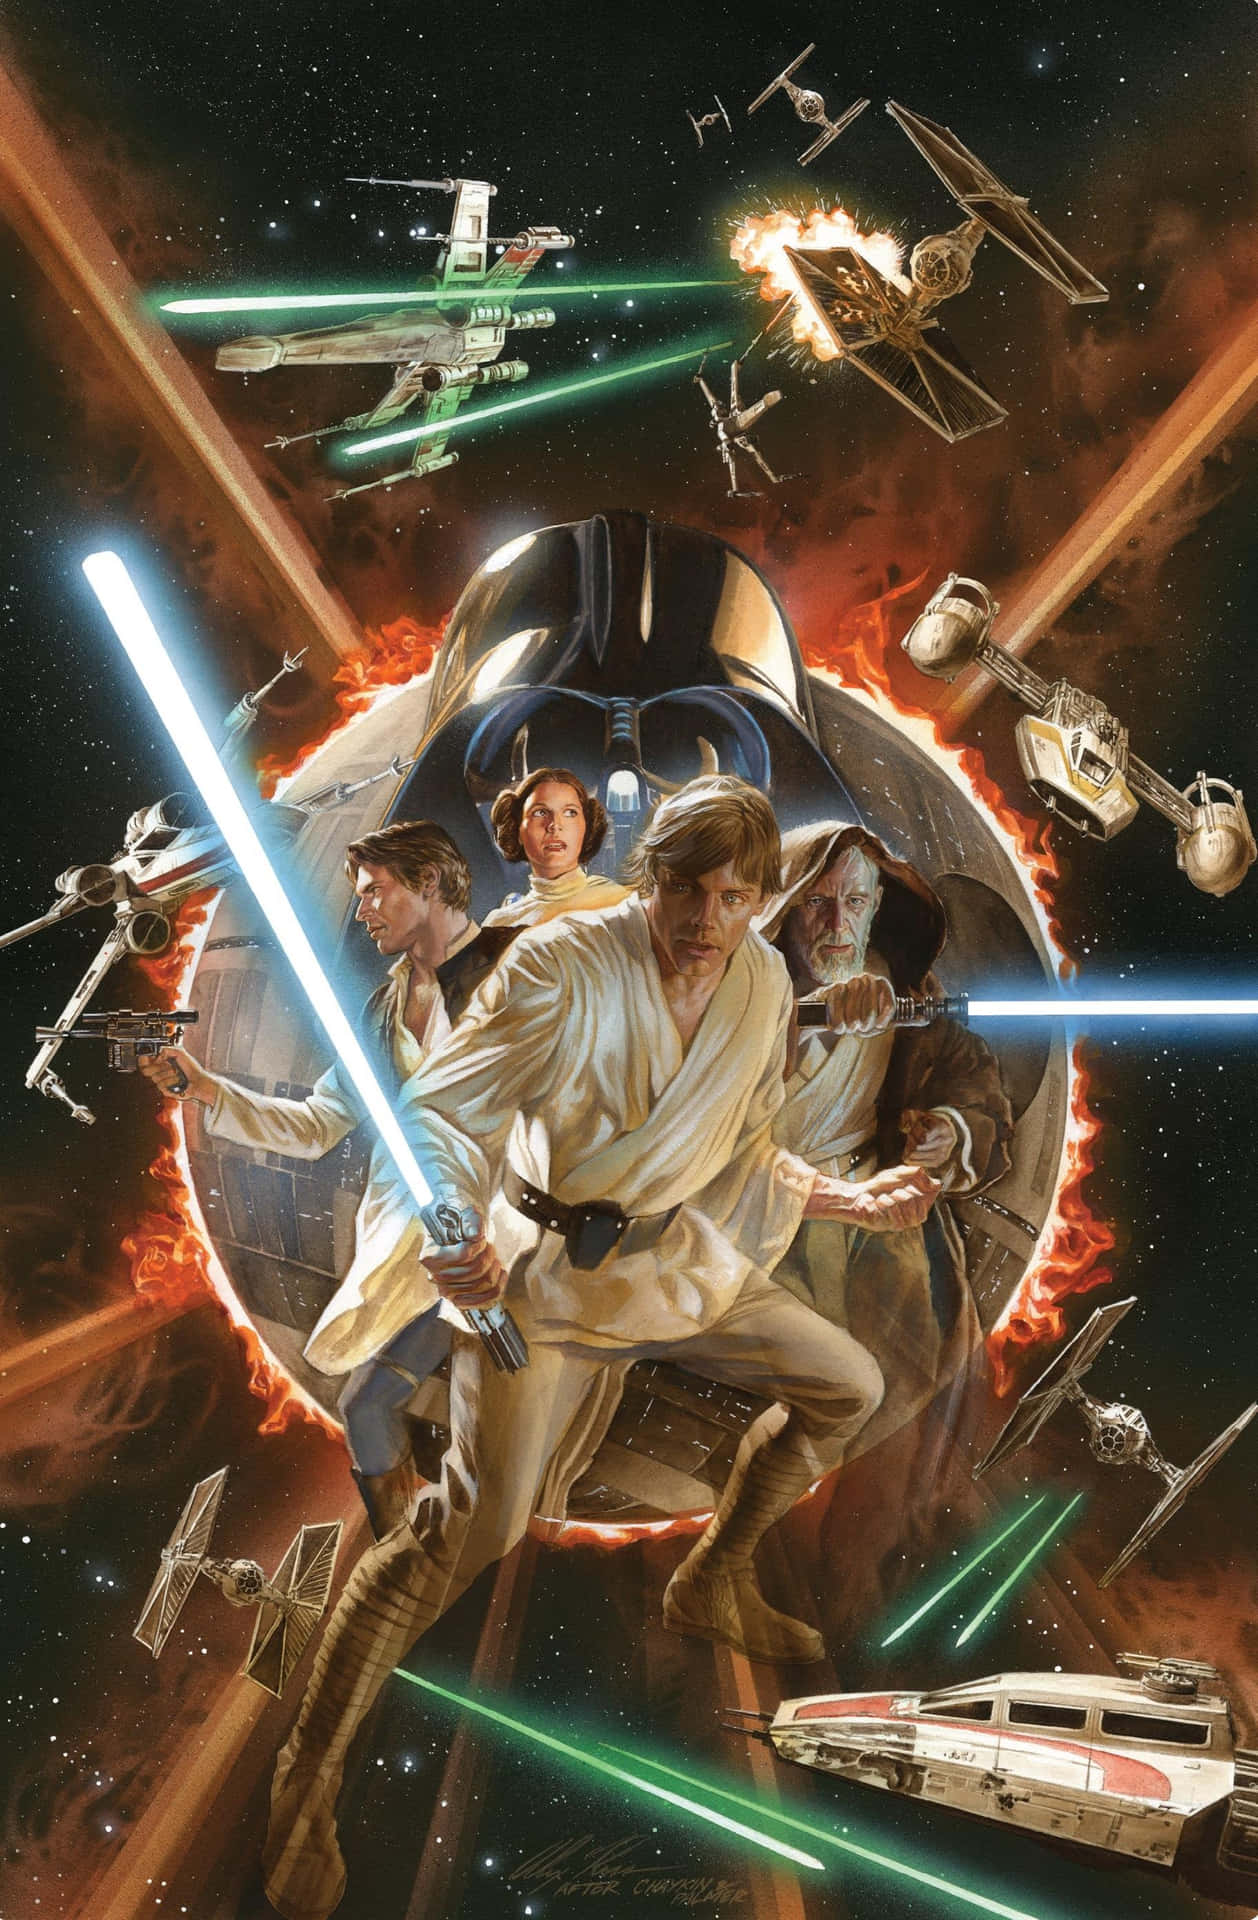 A futuristic scene of Tatooine as seen in "Star Wars: A New Hope" Wallpaper